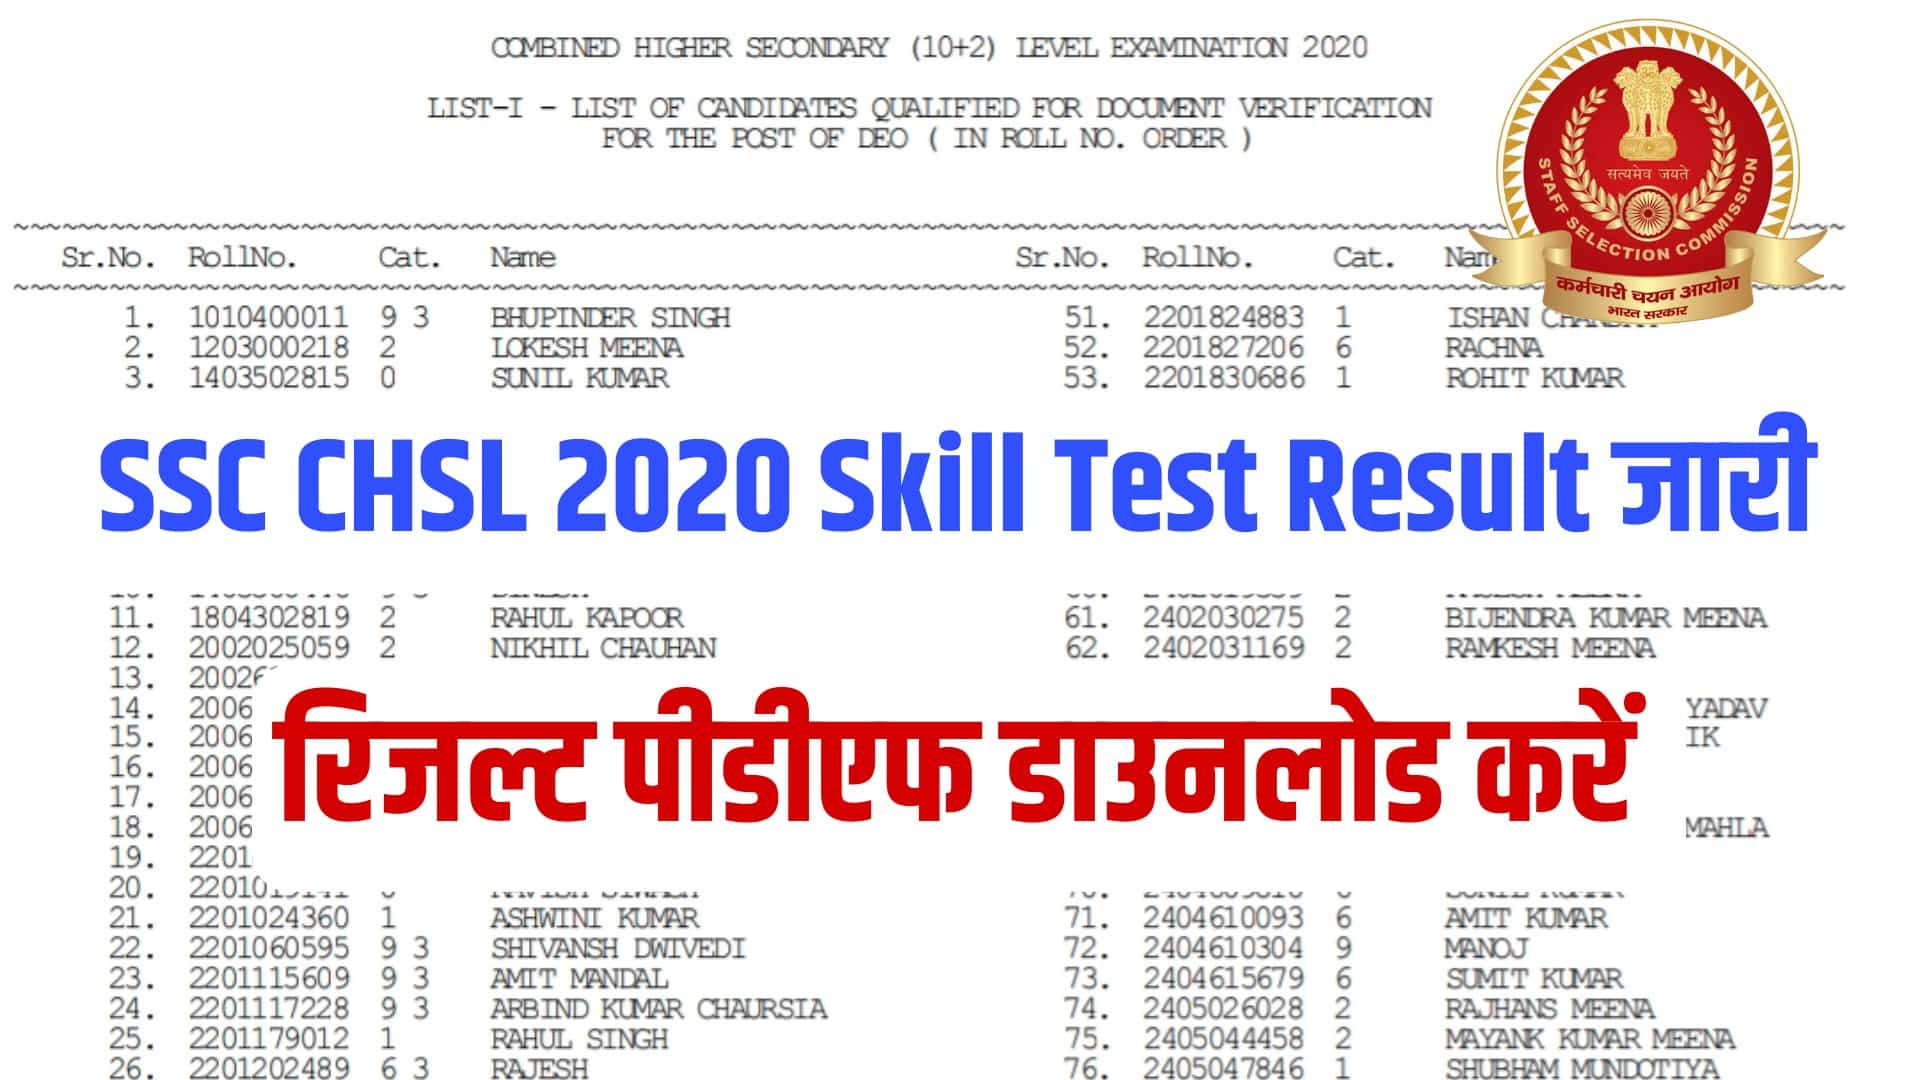 SSC CHSL 2020 Skill Test Result | एसएससी सिएचएसएल स्किल टेस्ट रिजल्ट जारी